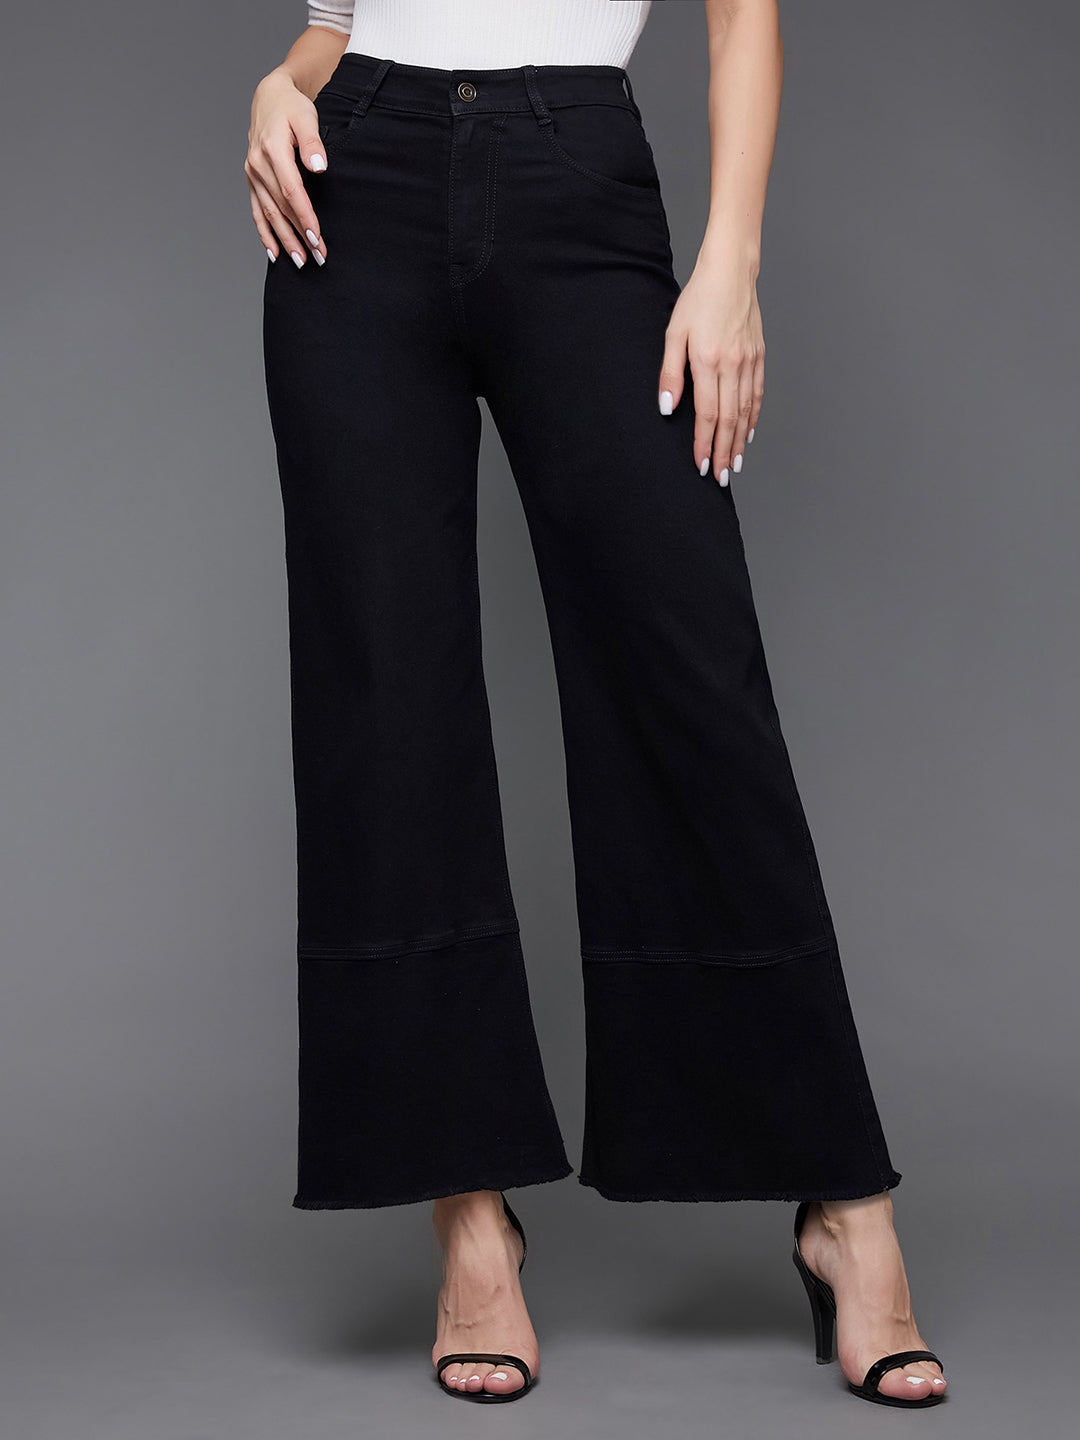 Black Wide Leg High Rise Clean Look Regular-Length Stretchable Denim Jeans